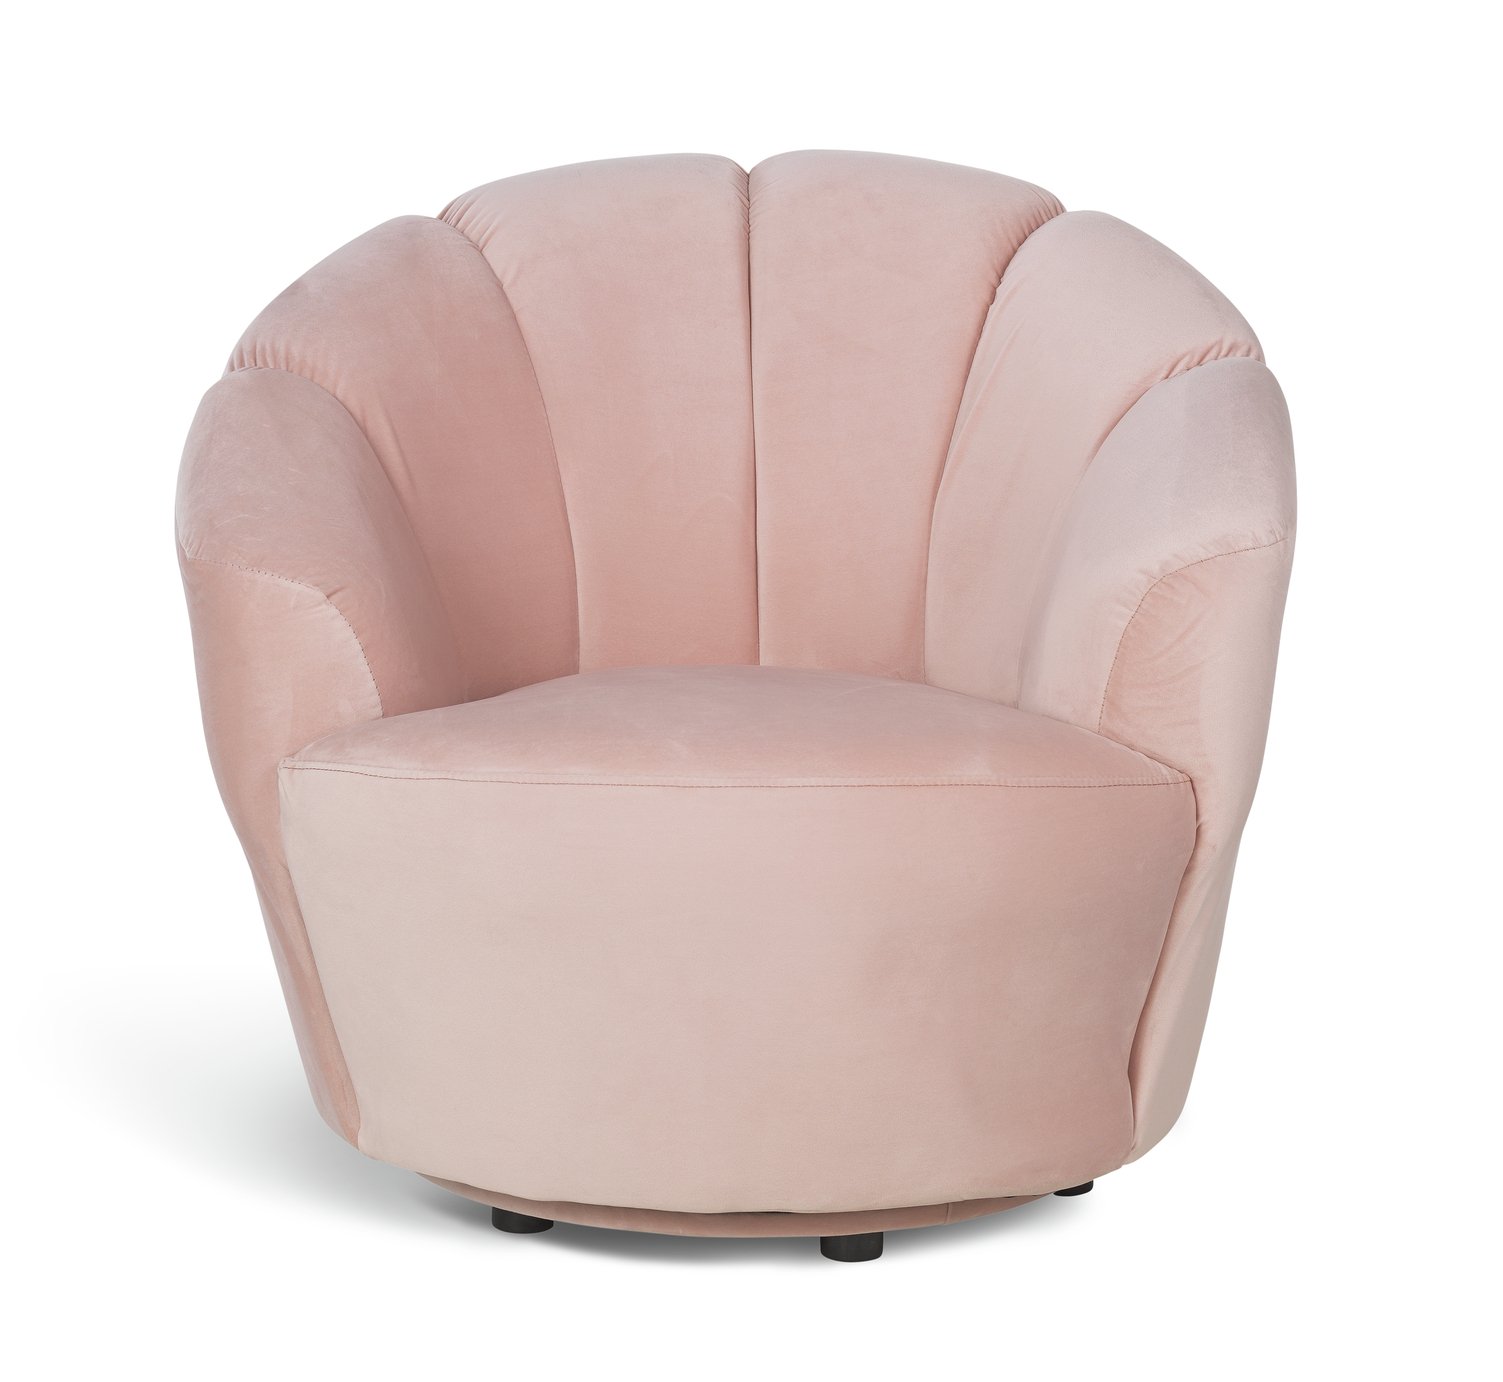 Argos Home Ezra Velvet Swivel Chair - Blush Pink (9158472) | Argos